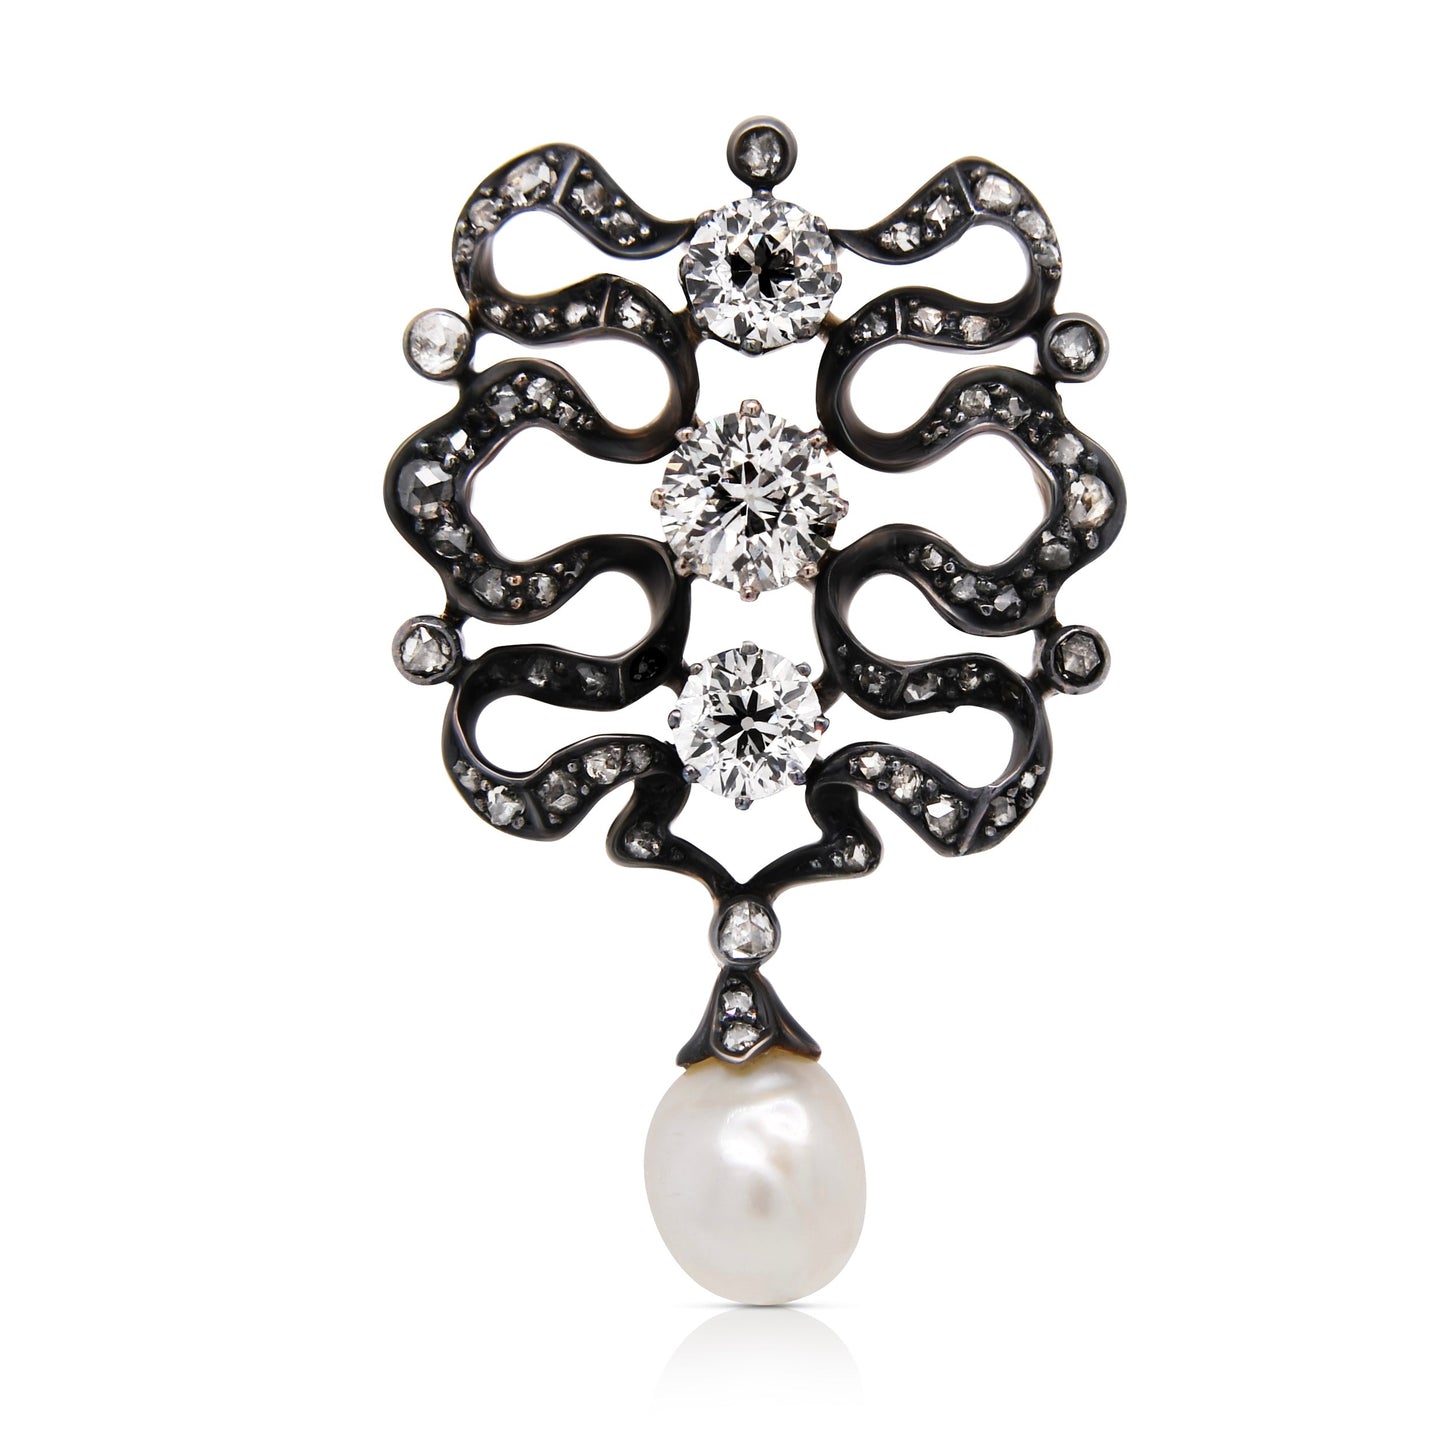 Installment 6/11 - Belle Époque old European cut diamond and pearl pendant